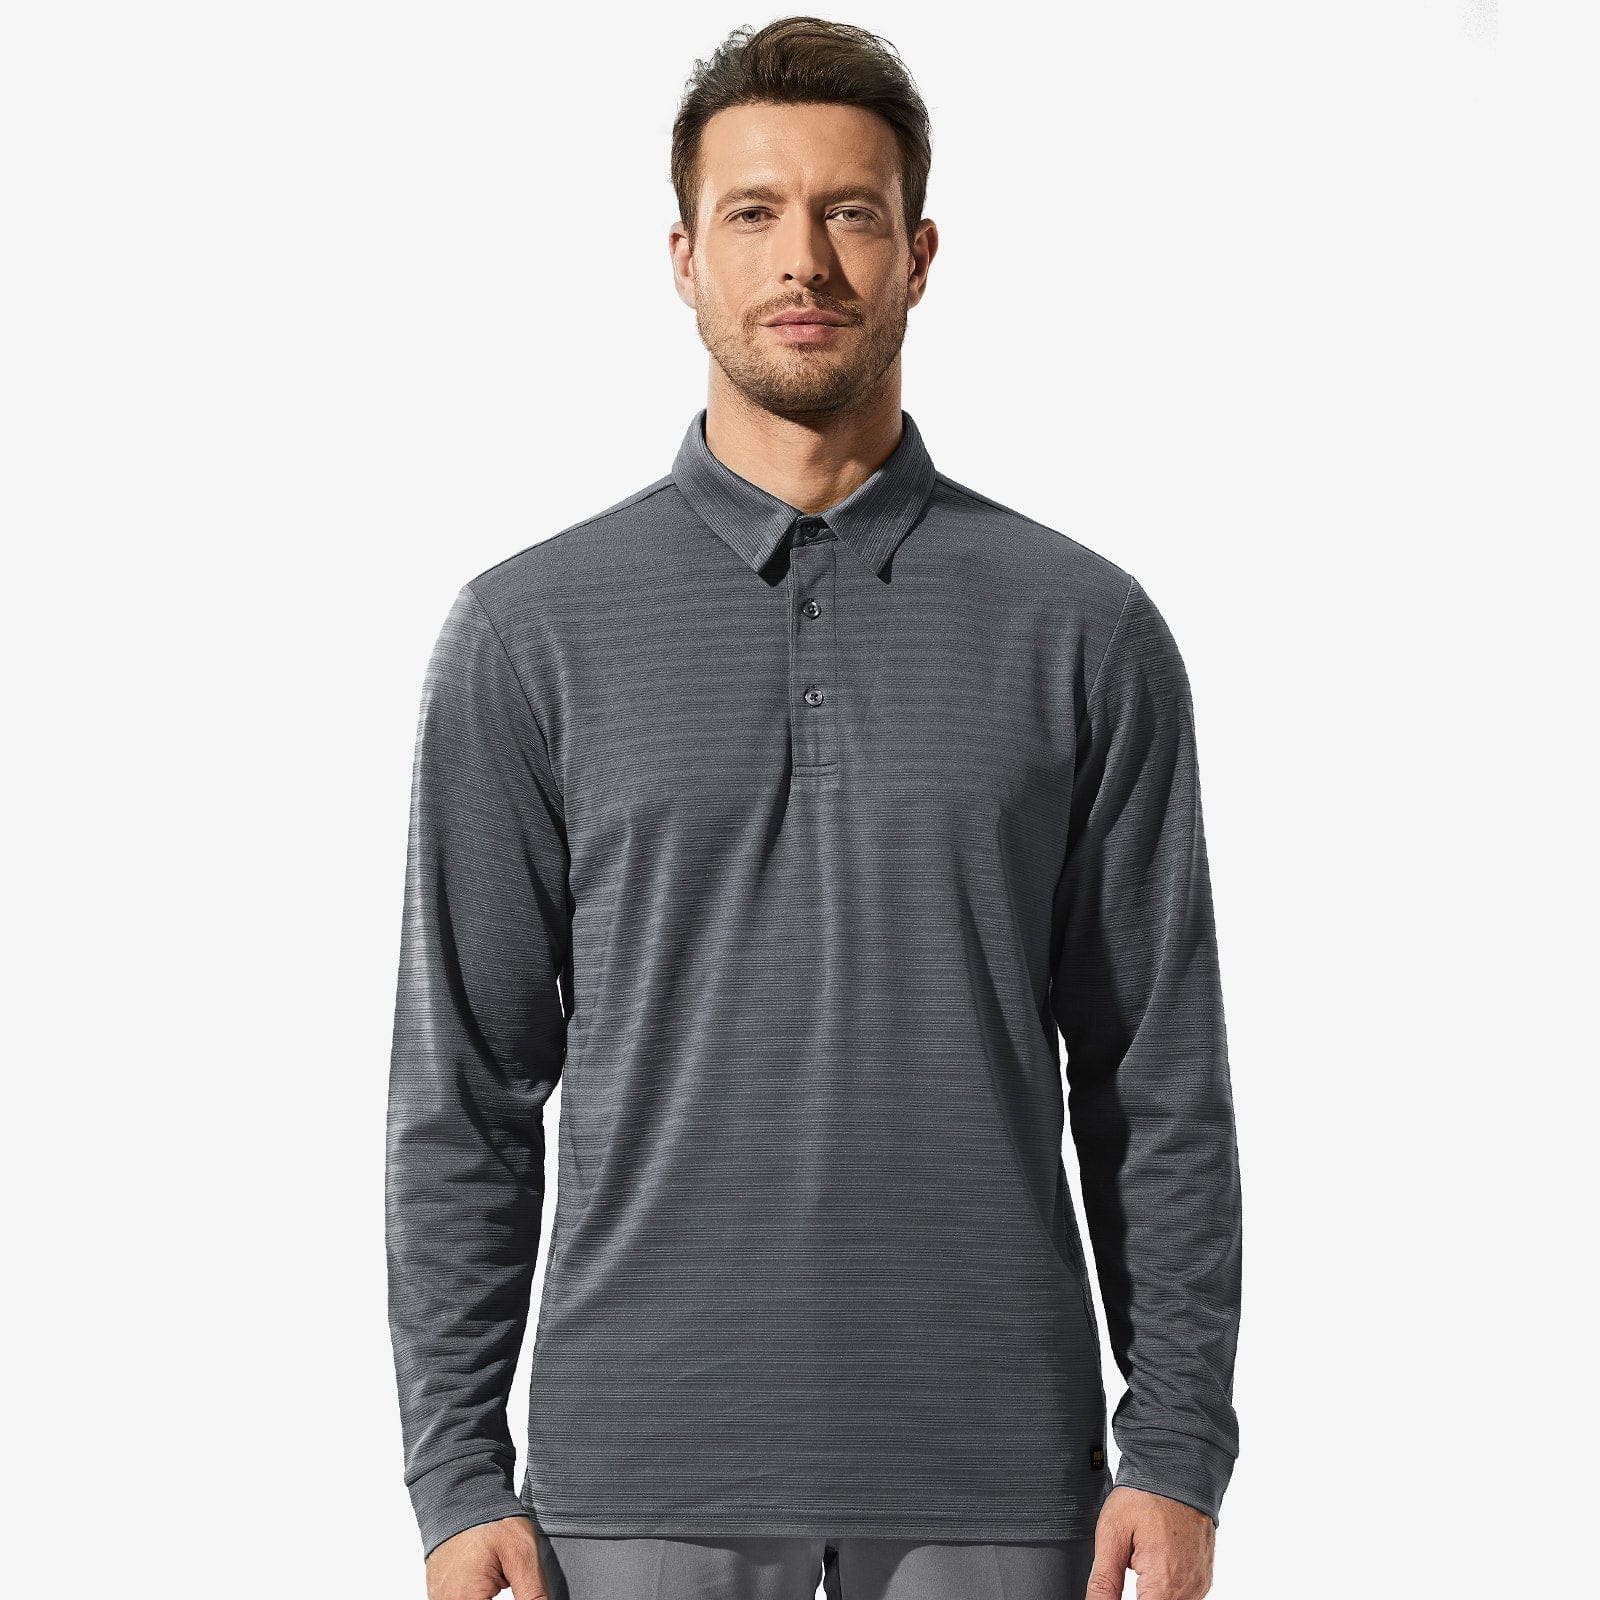 Men's Long Sleeve Polo Shirts Striped Quick Dry Golf Shirts, Dark Grey / XL